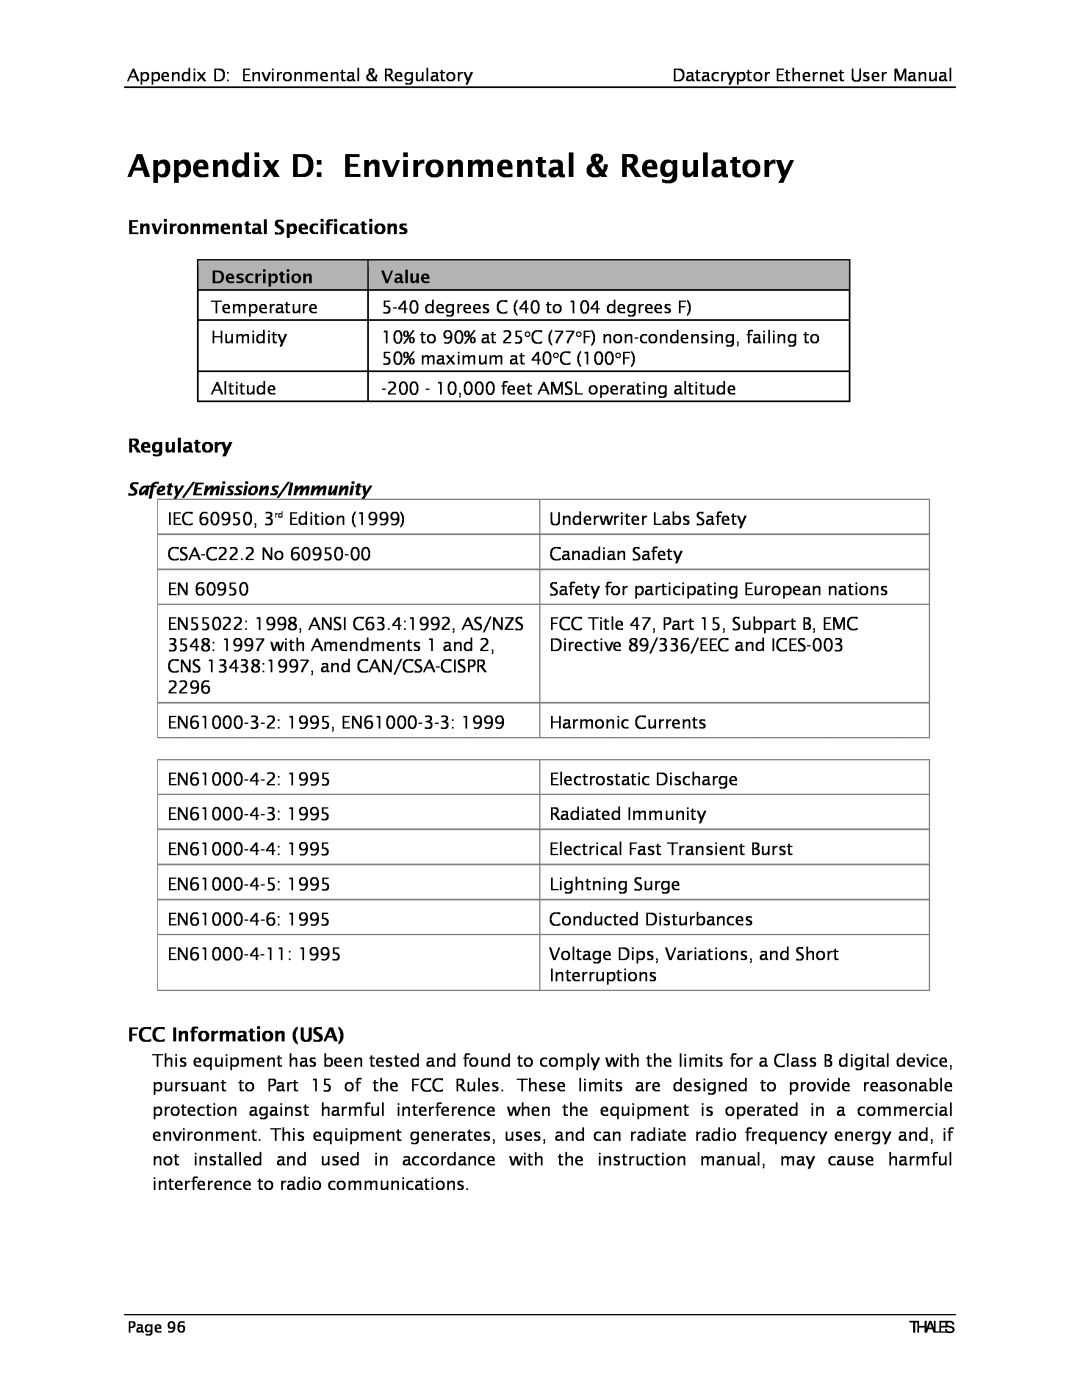 Angenieux 1270A450-005 Appendix D Environmental & Regulatory, Environmental Specifications, FCC Information USA, Value 